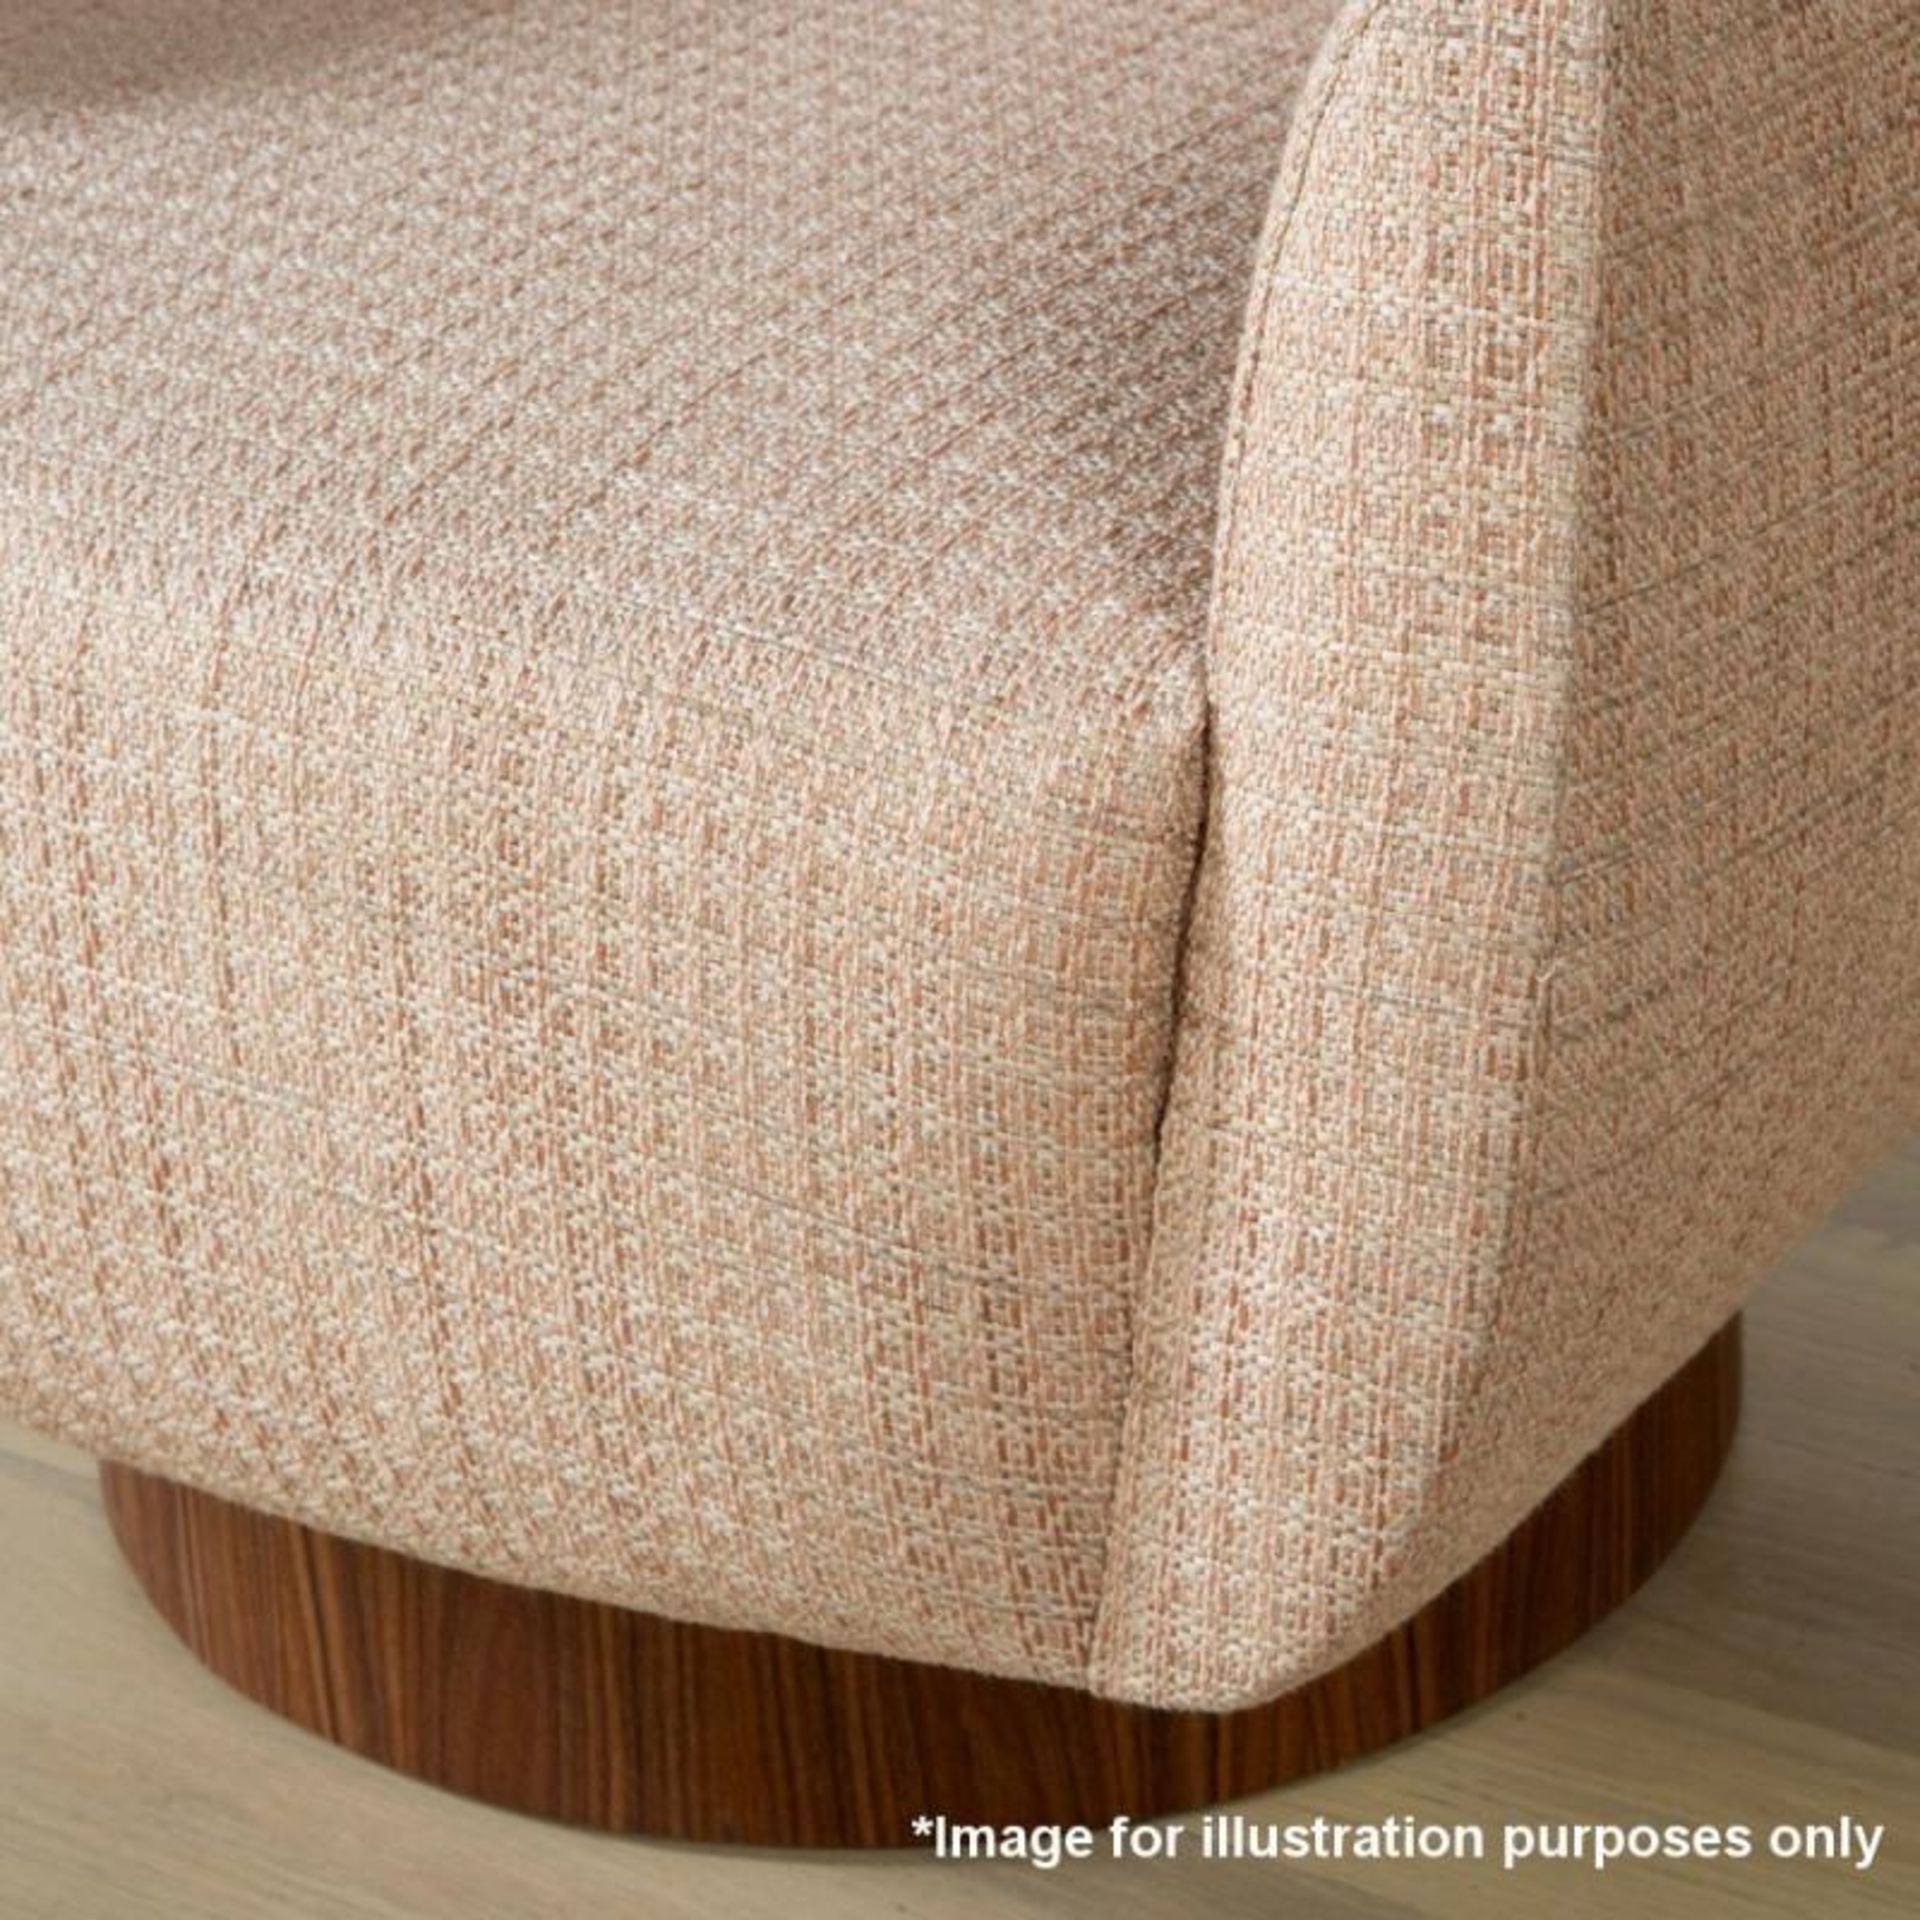 1 x KELLY WEARSTLER Sonara Swivel Chair Rosewood - Dimensions: 31” W x 35” D x 31” H - Ex-Display In - Image 3 of 28